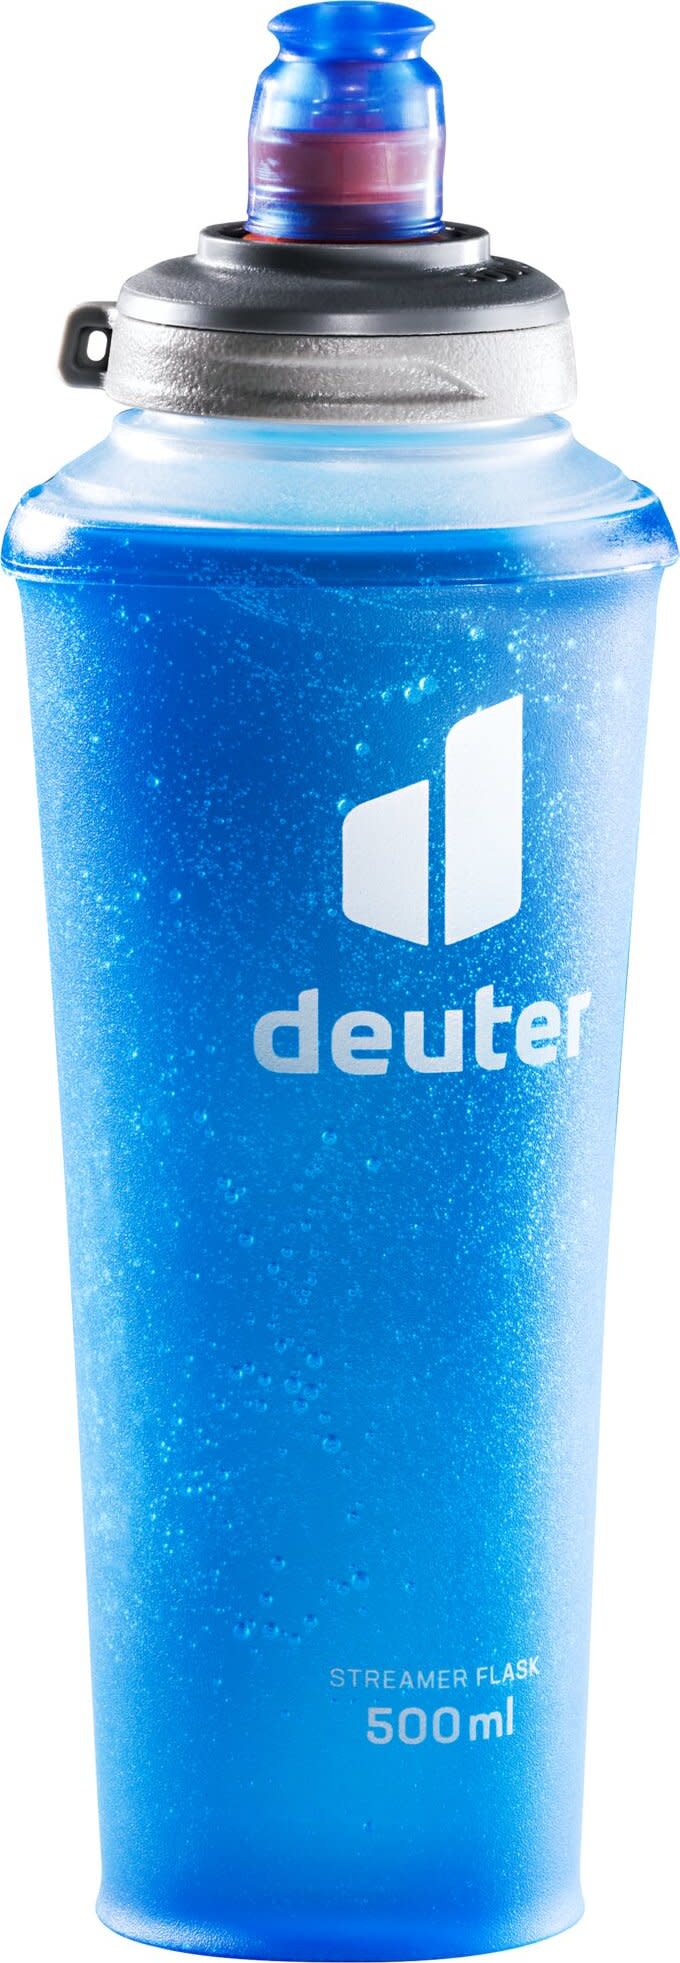 Deuter Streamer Flask 500 ml Transparent Deuter